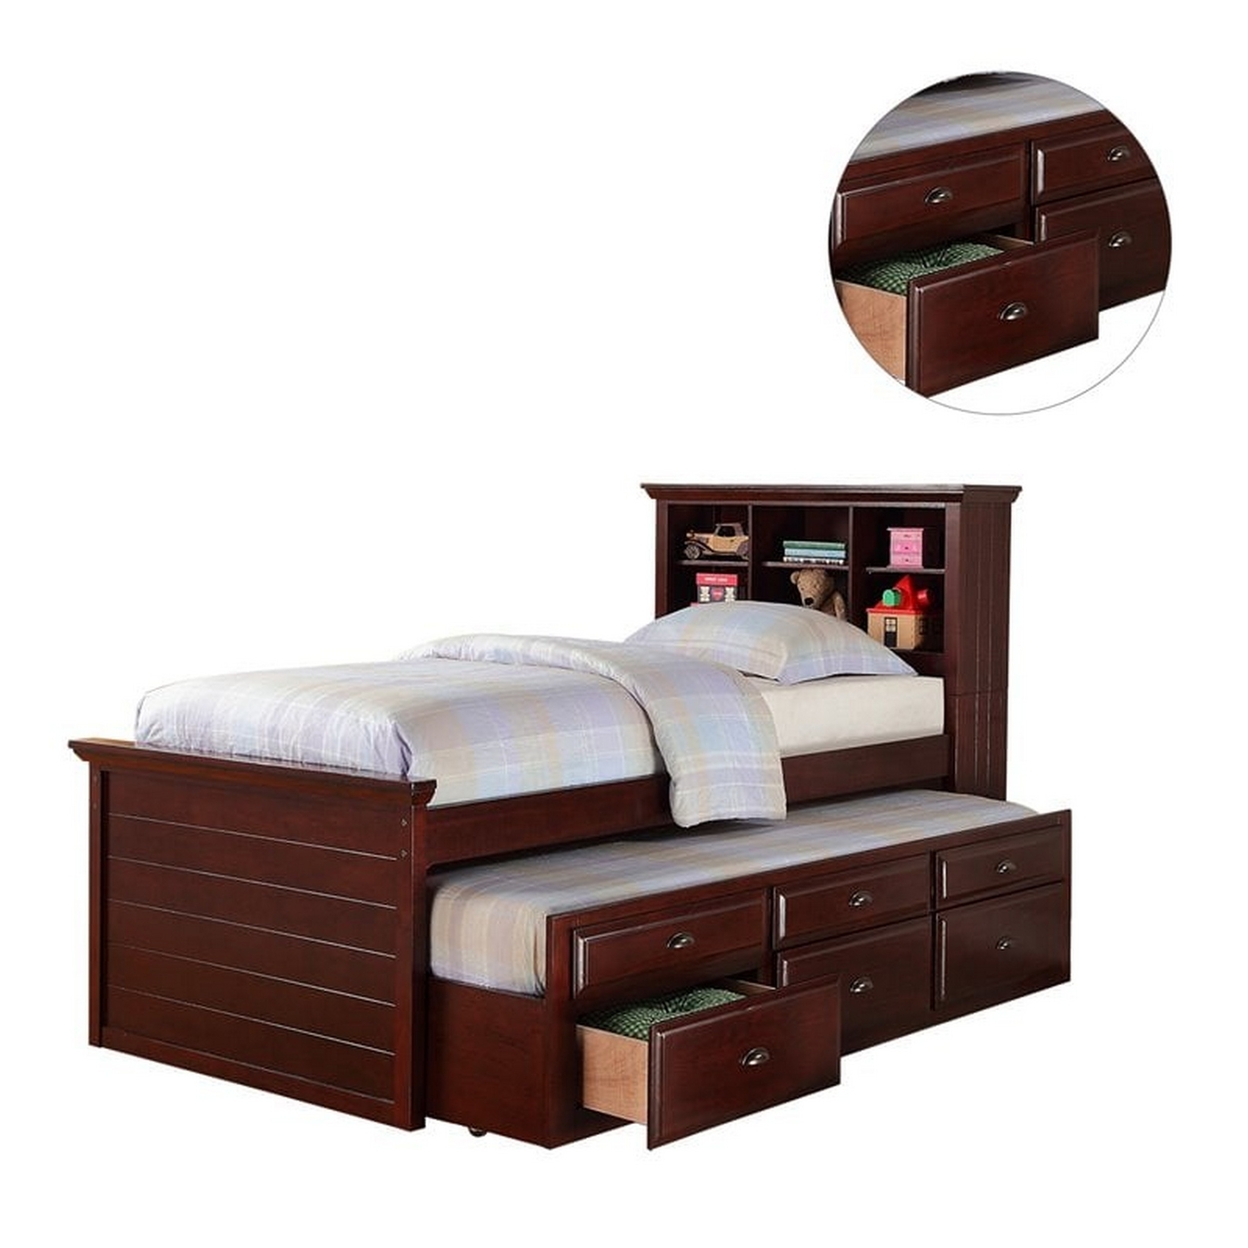 Toni Twin Size Trundle Bed With 6 Drawers, Bookcase Headboard, Brown Wood- Saltoro Sherpi